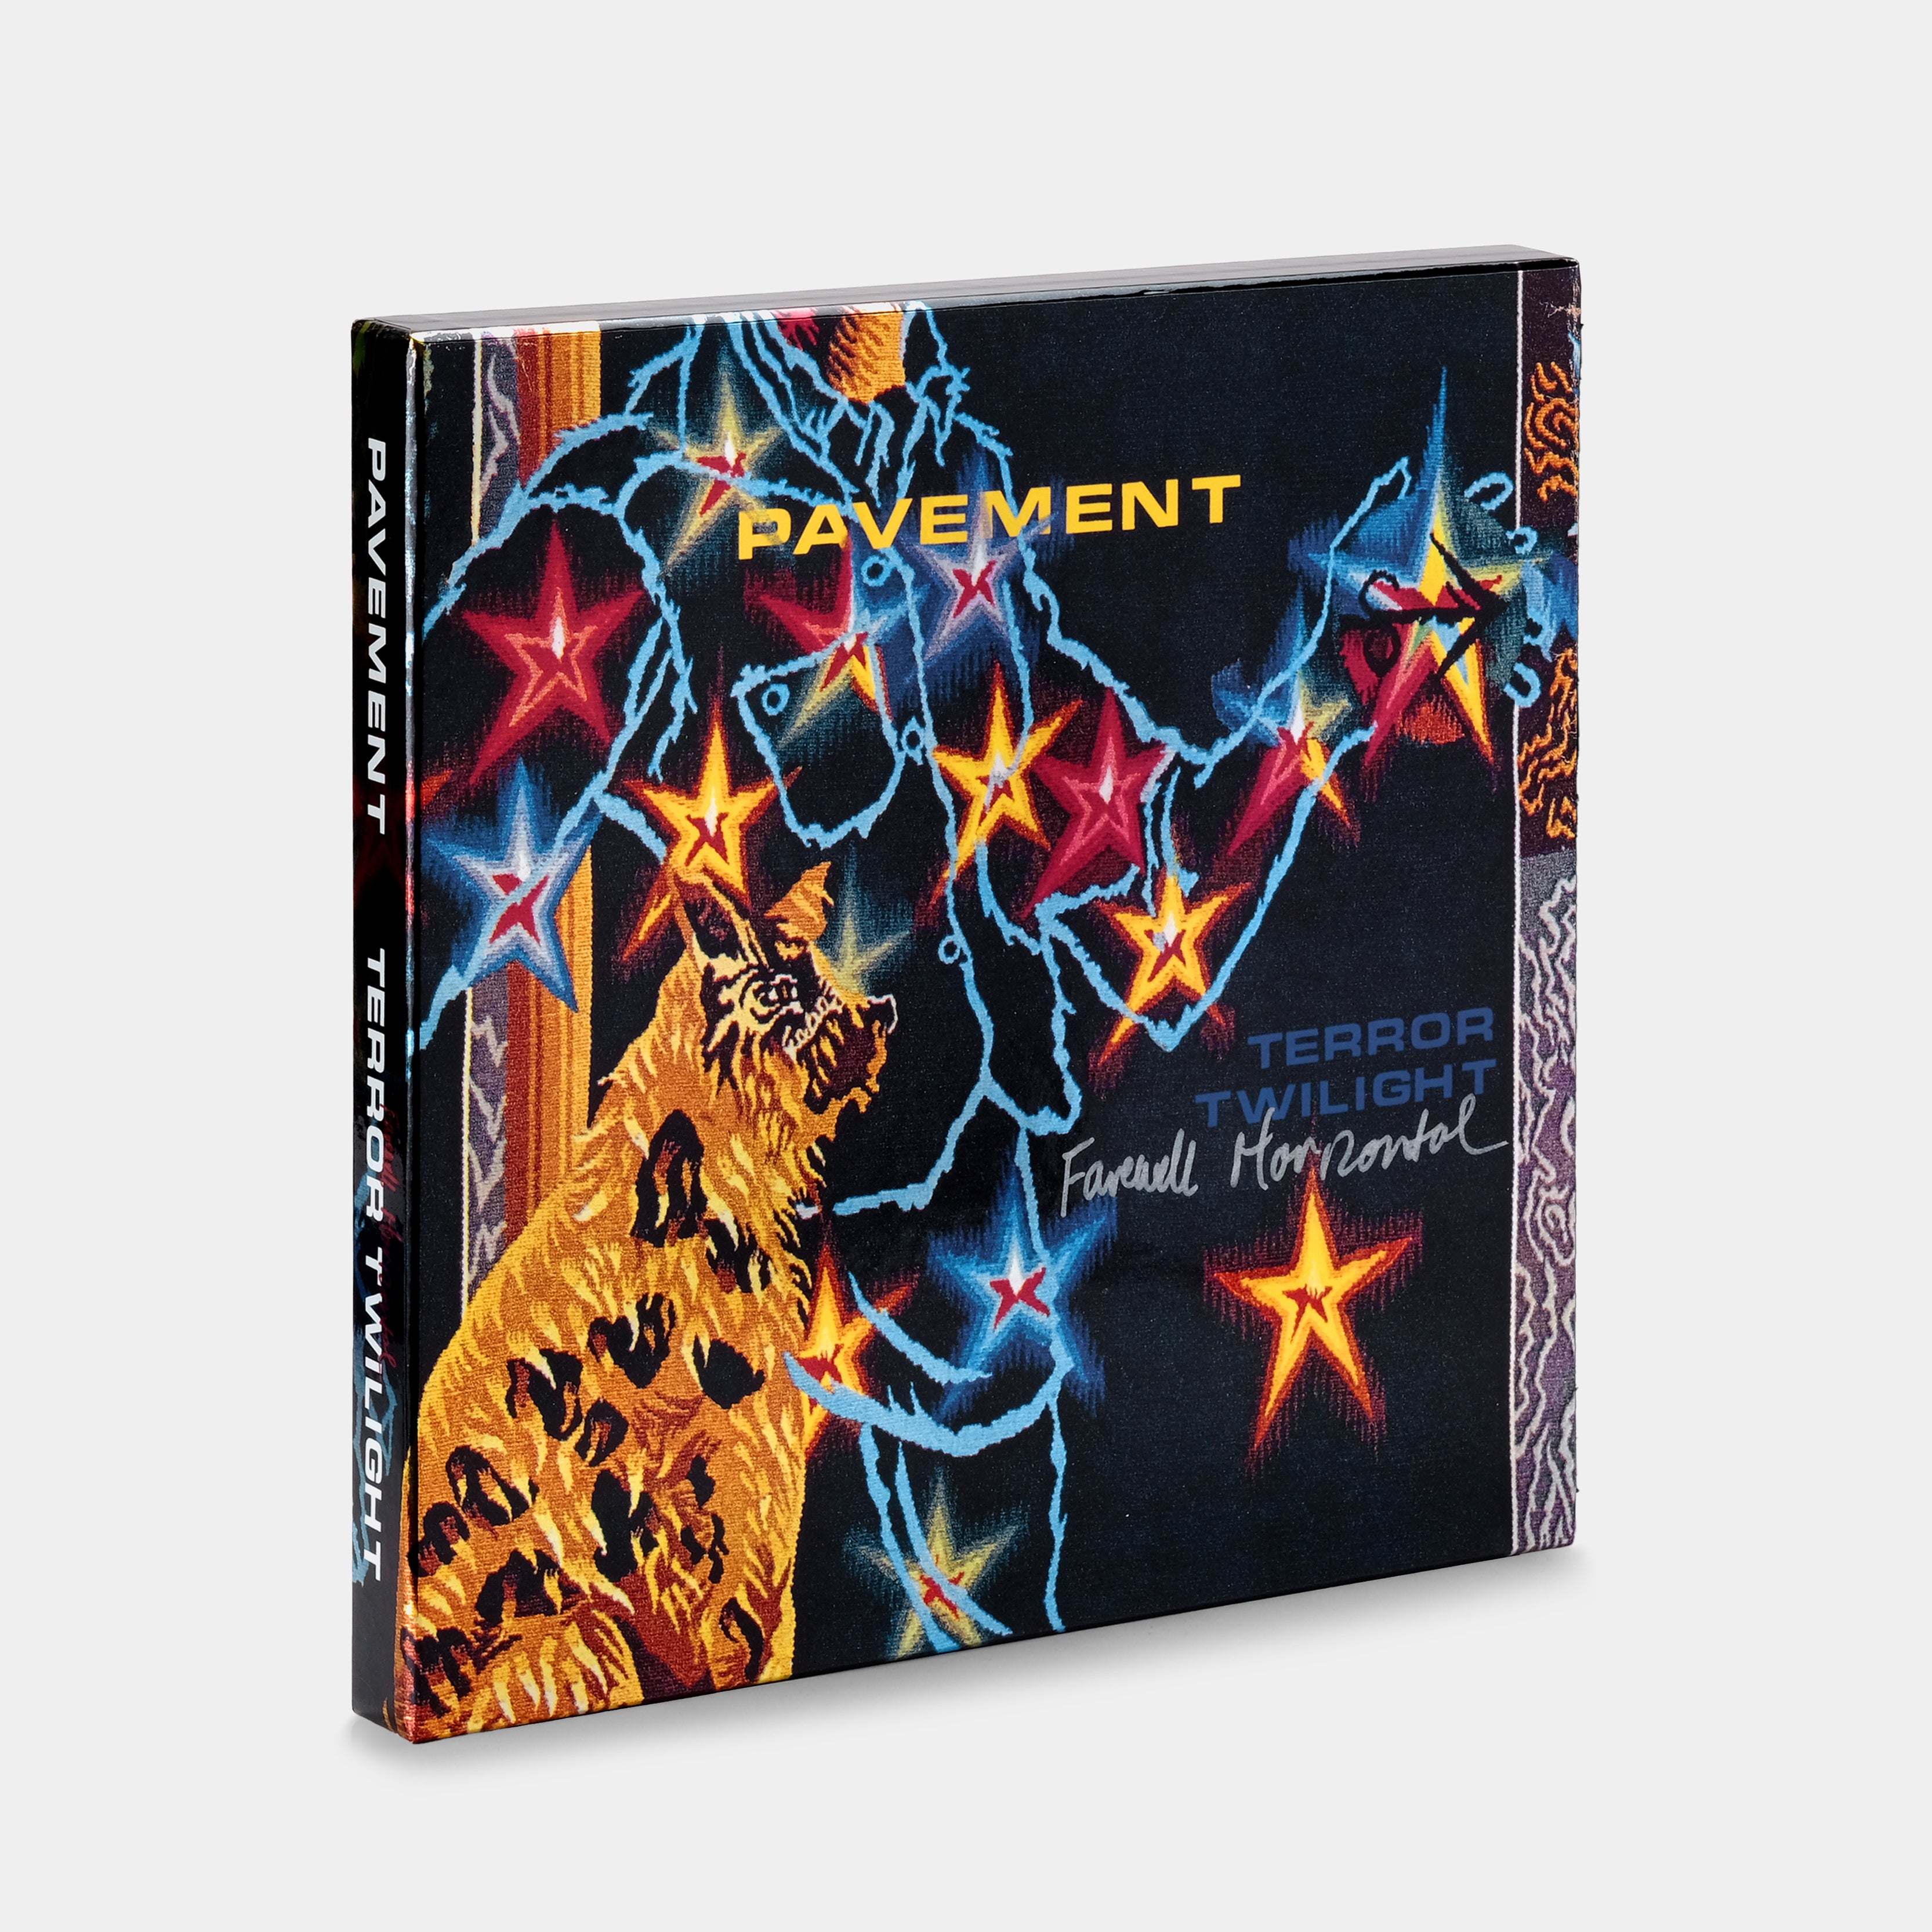 Pavement - Terror Twilight: Farewell Horizontal 4xLP Box Set Vinyl Record